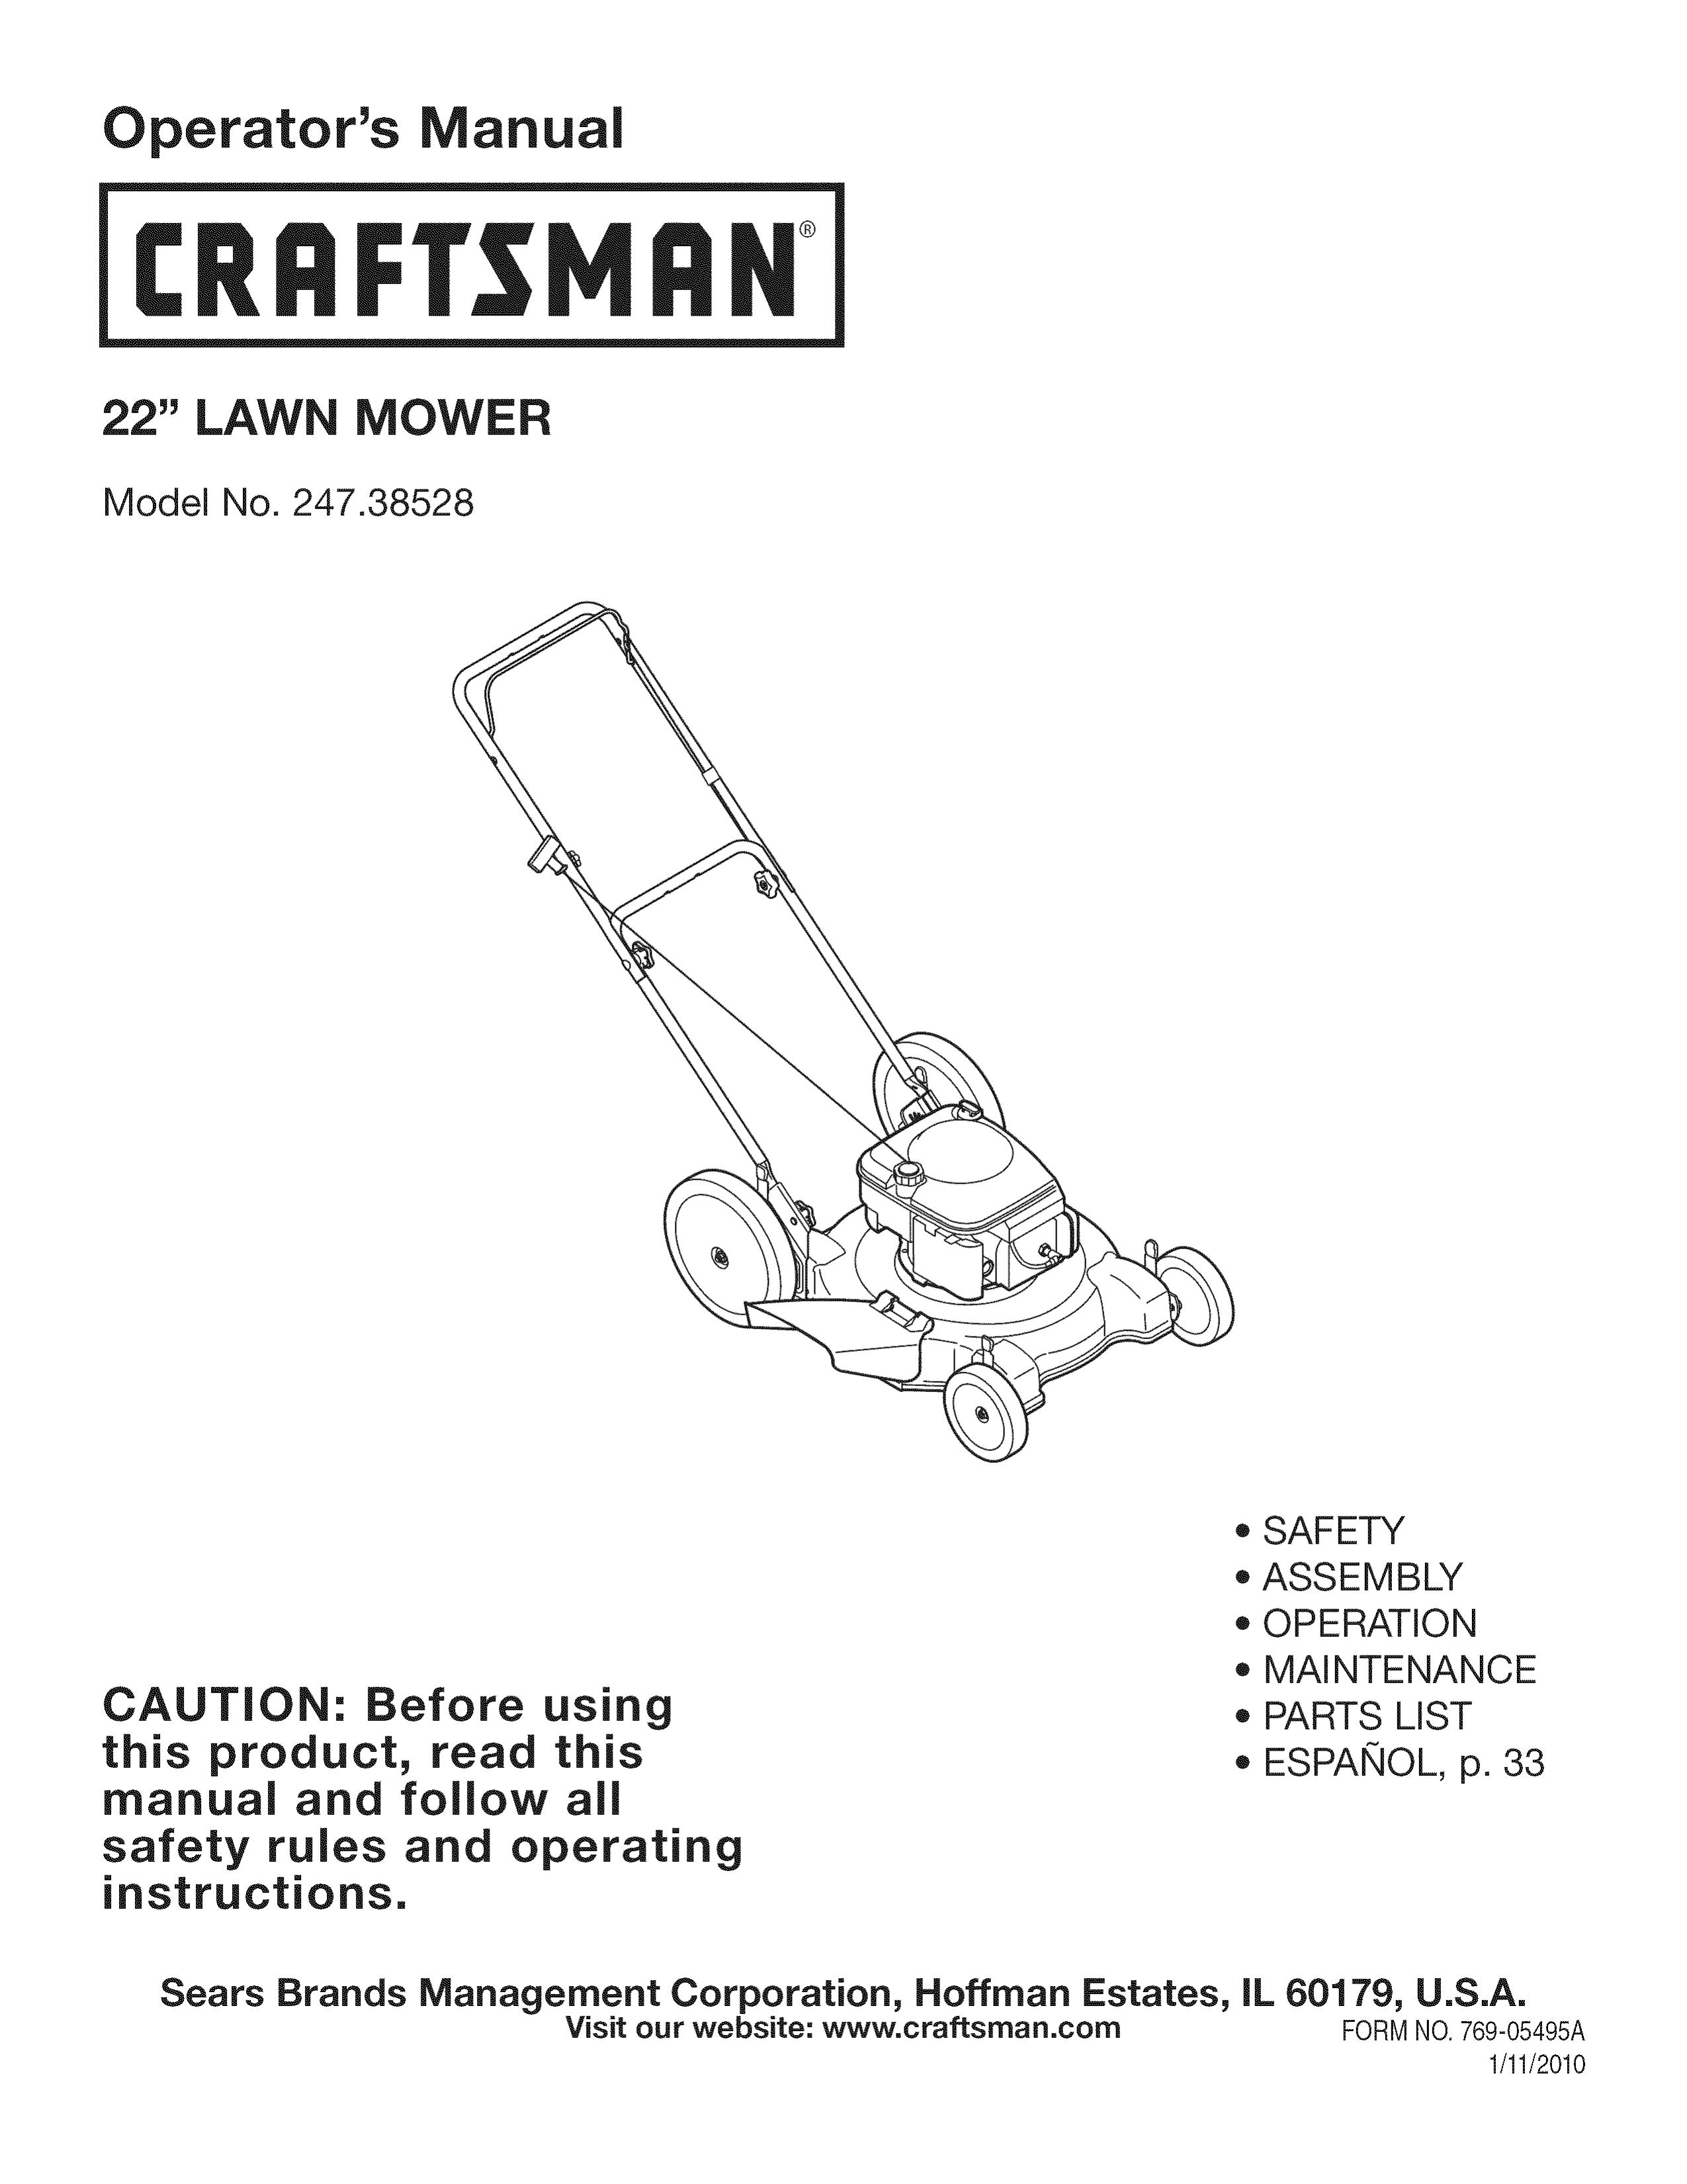 Craftsman 247.38528 Lawn Mower User Manual